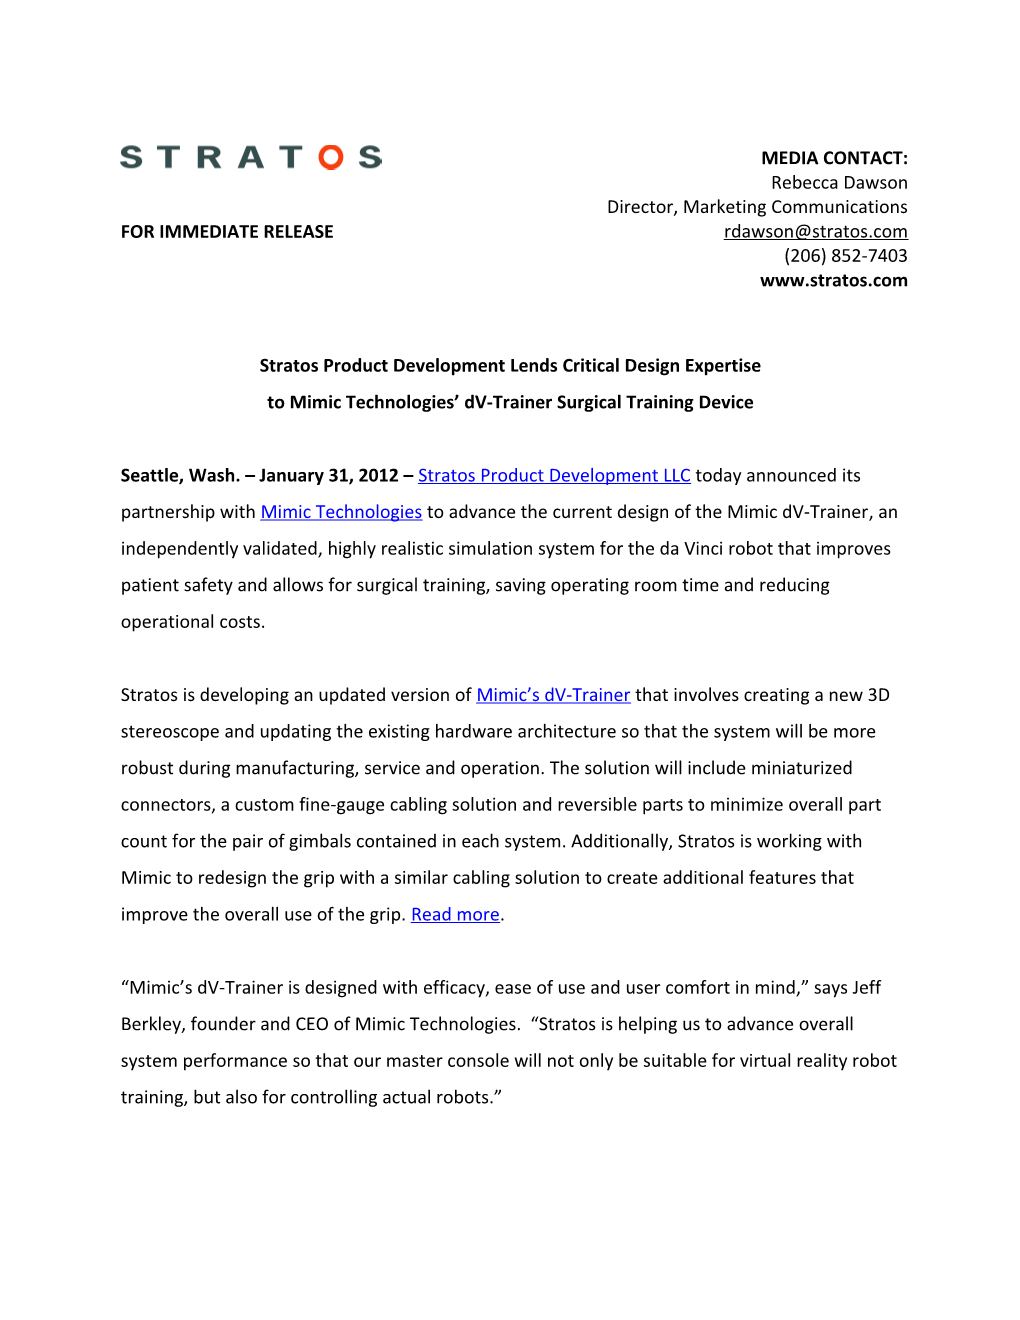 Stratos Product Developmentlends Critical Design Expertise